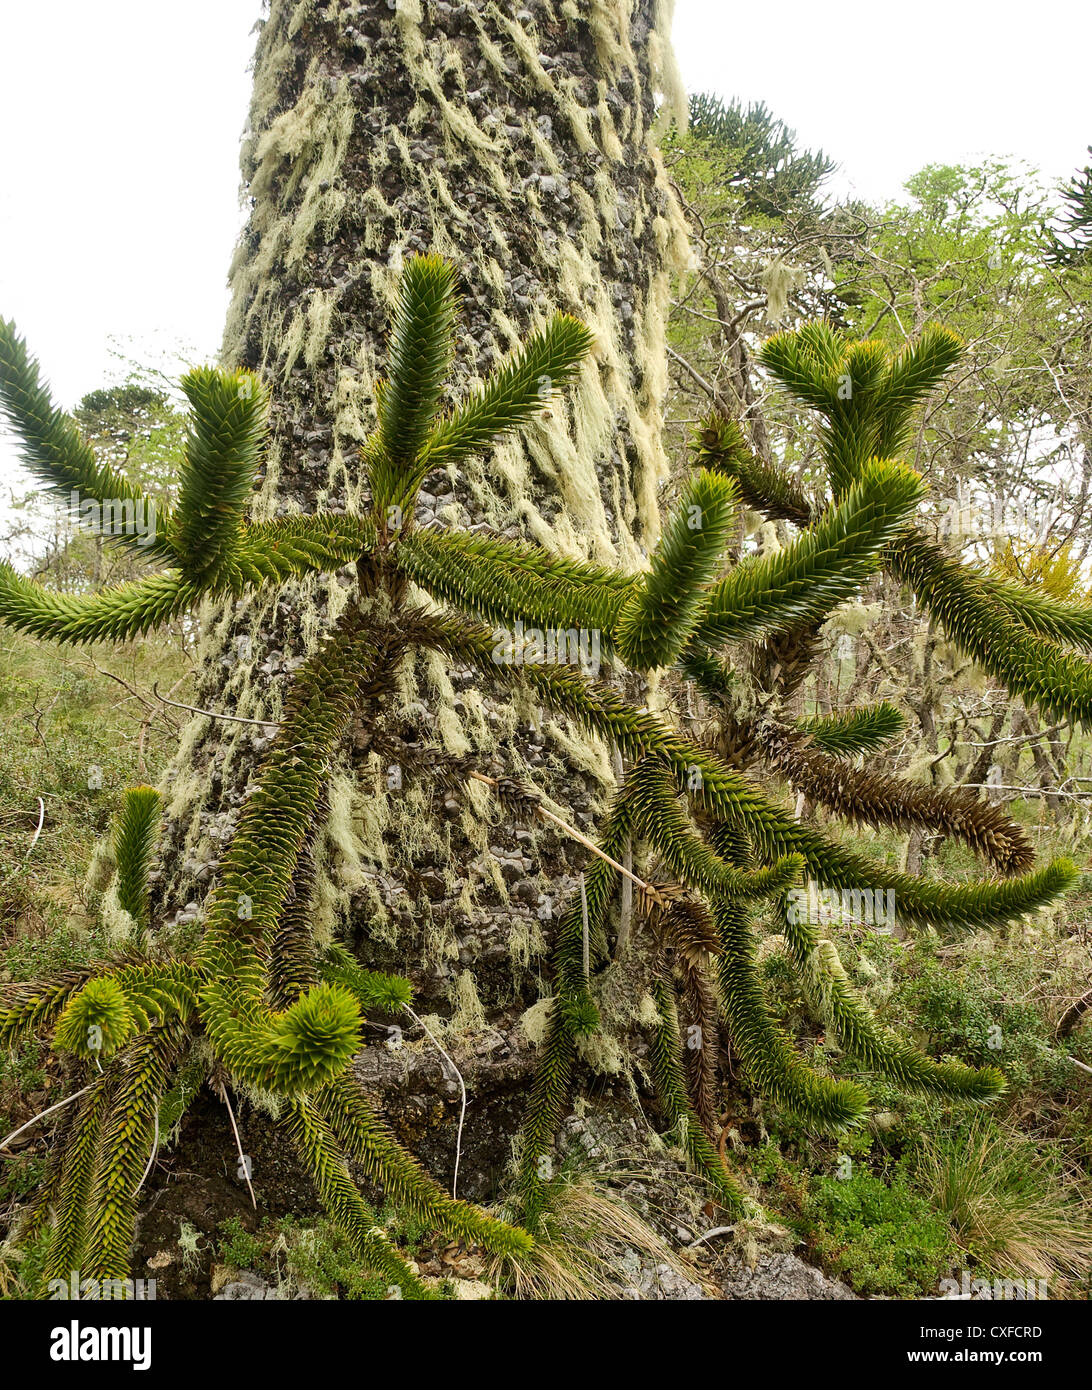 Elk198-3051v Chile, Conguillio National Park, Monkey Puzzle tree, Araucaria Stock Photo